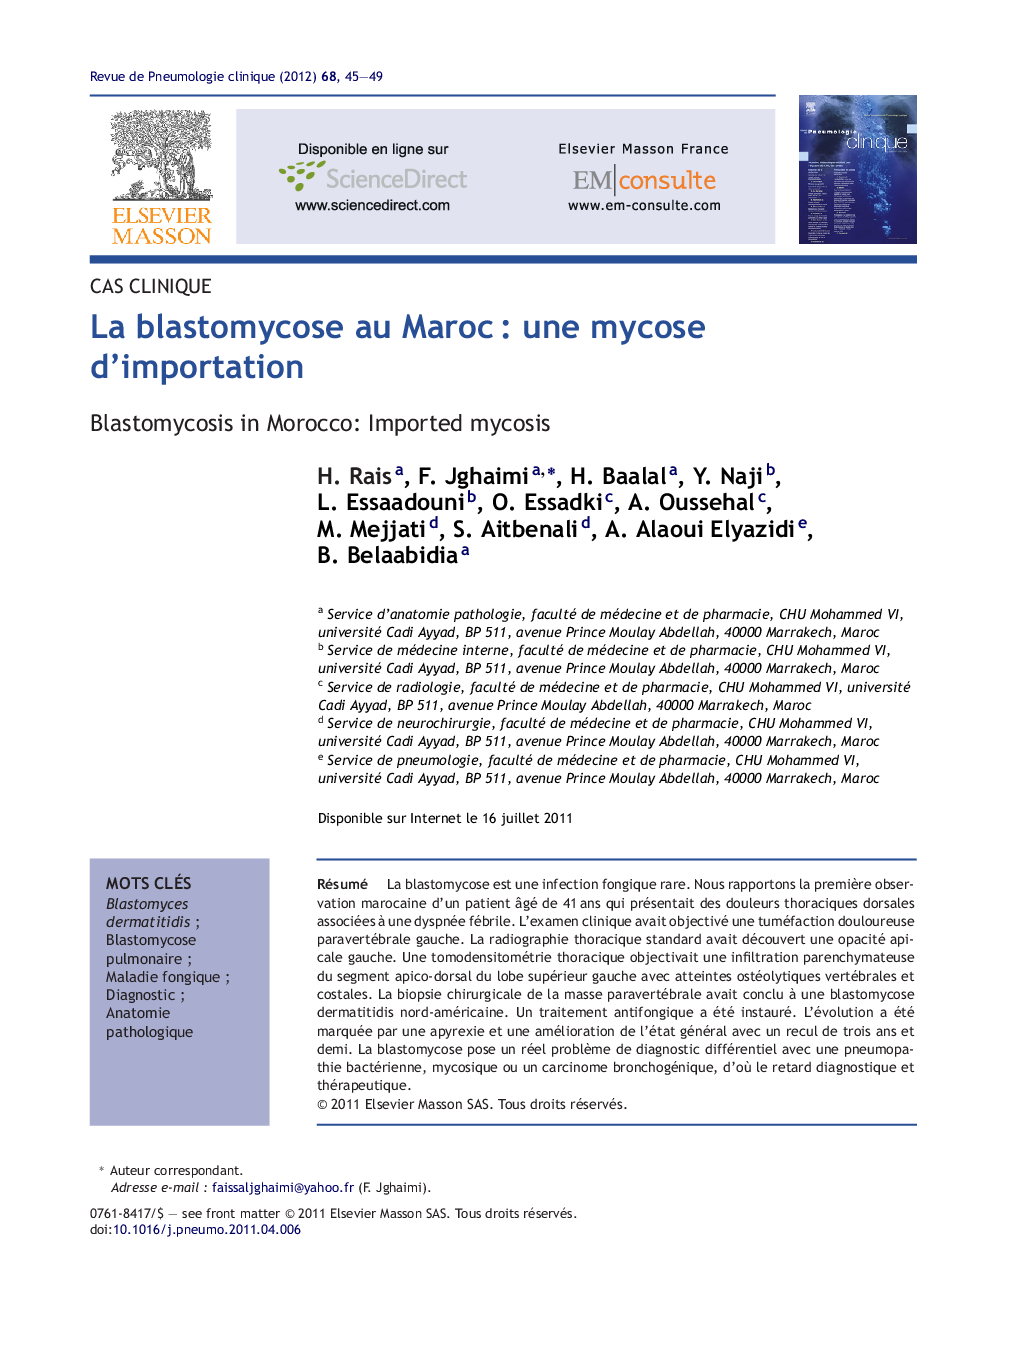 La blastomycose au MarocÂ : une mycose d'importation